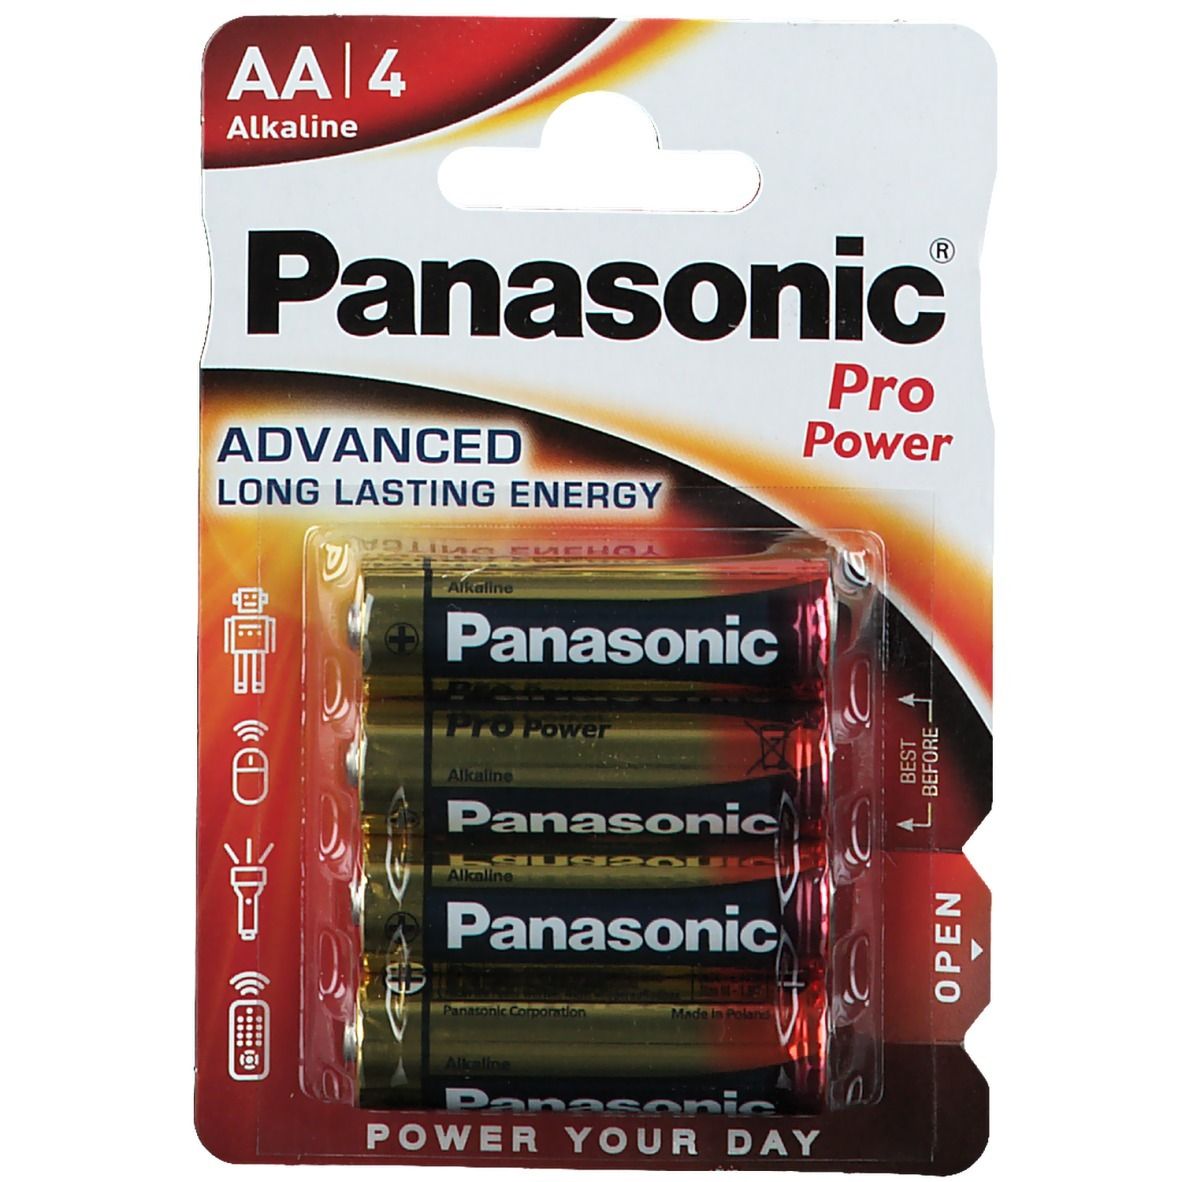 Panasonic XTREME POWER Batterien